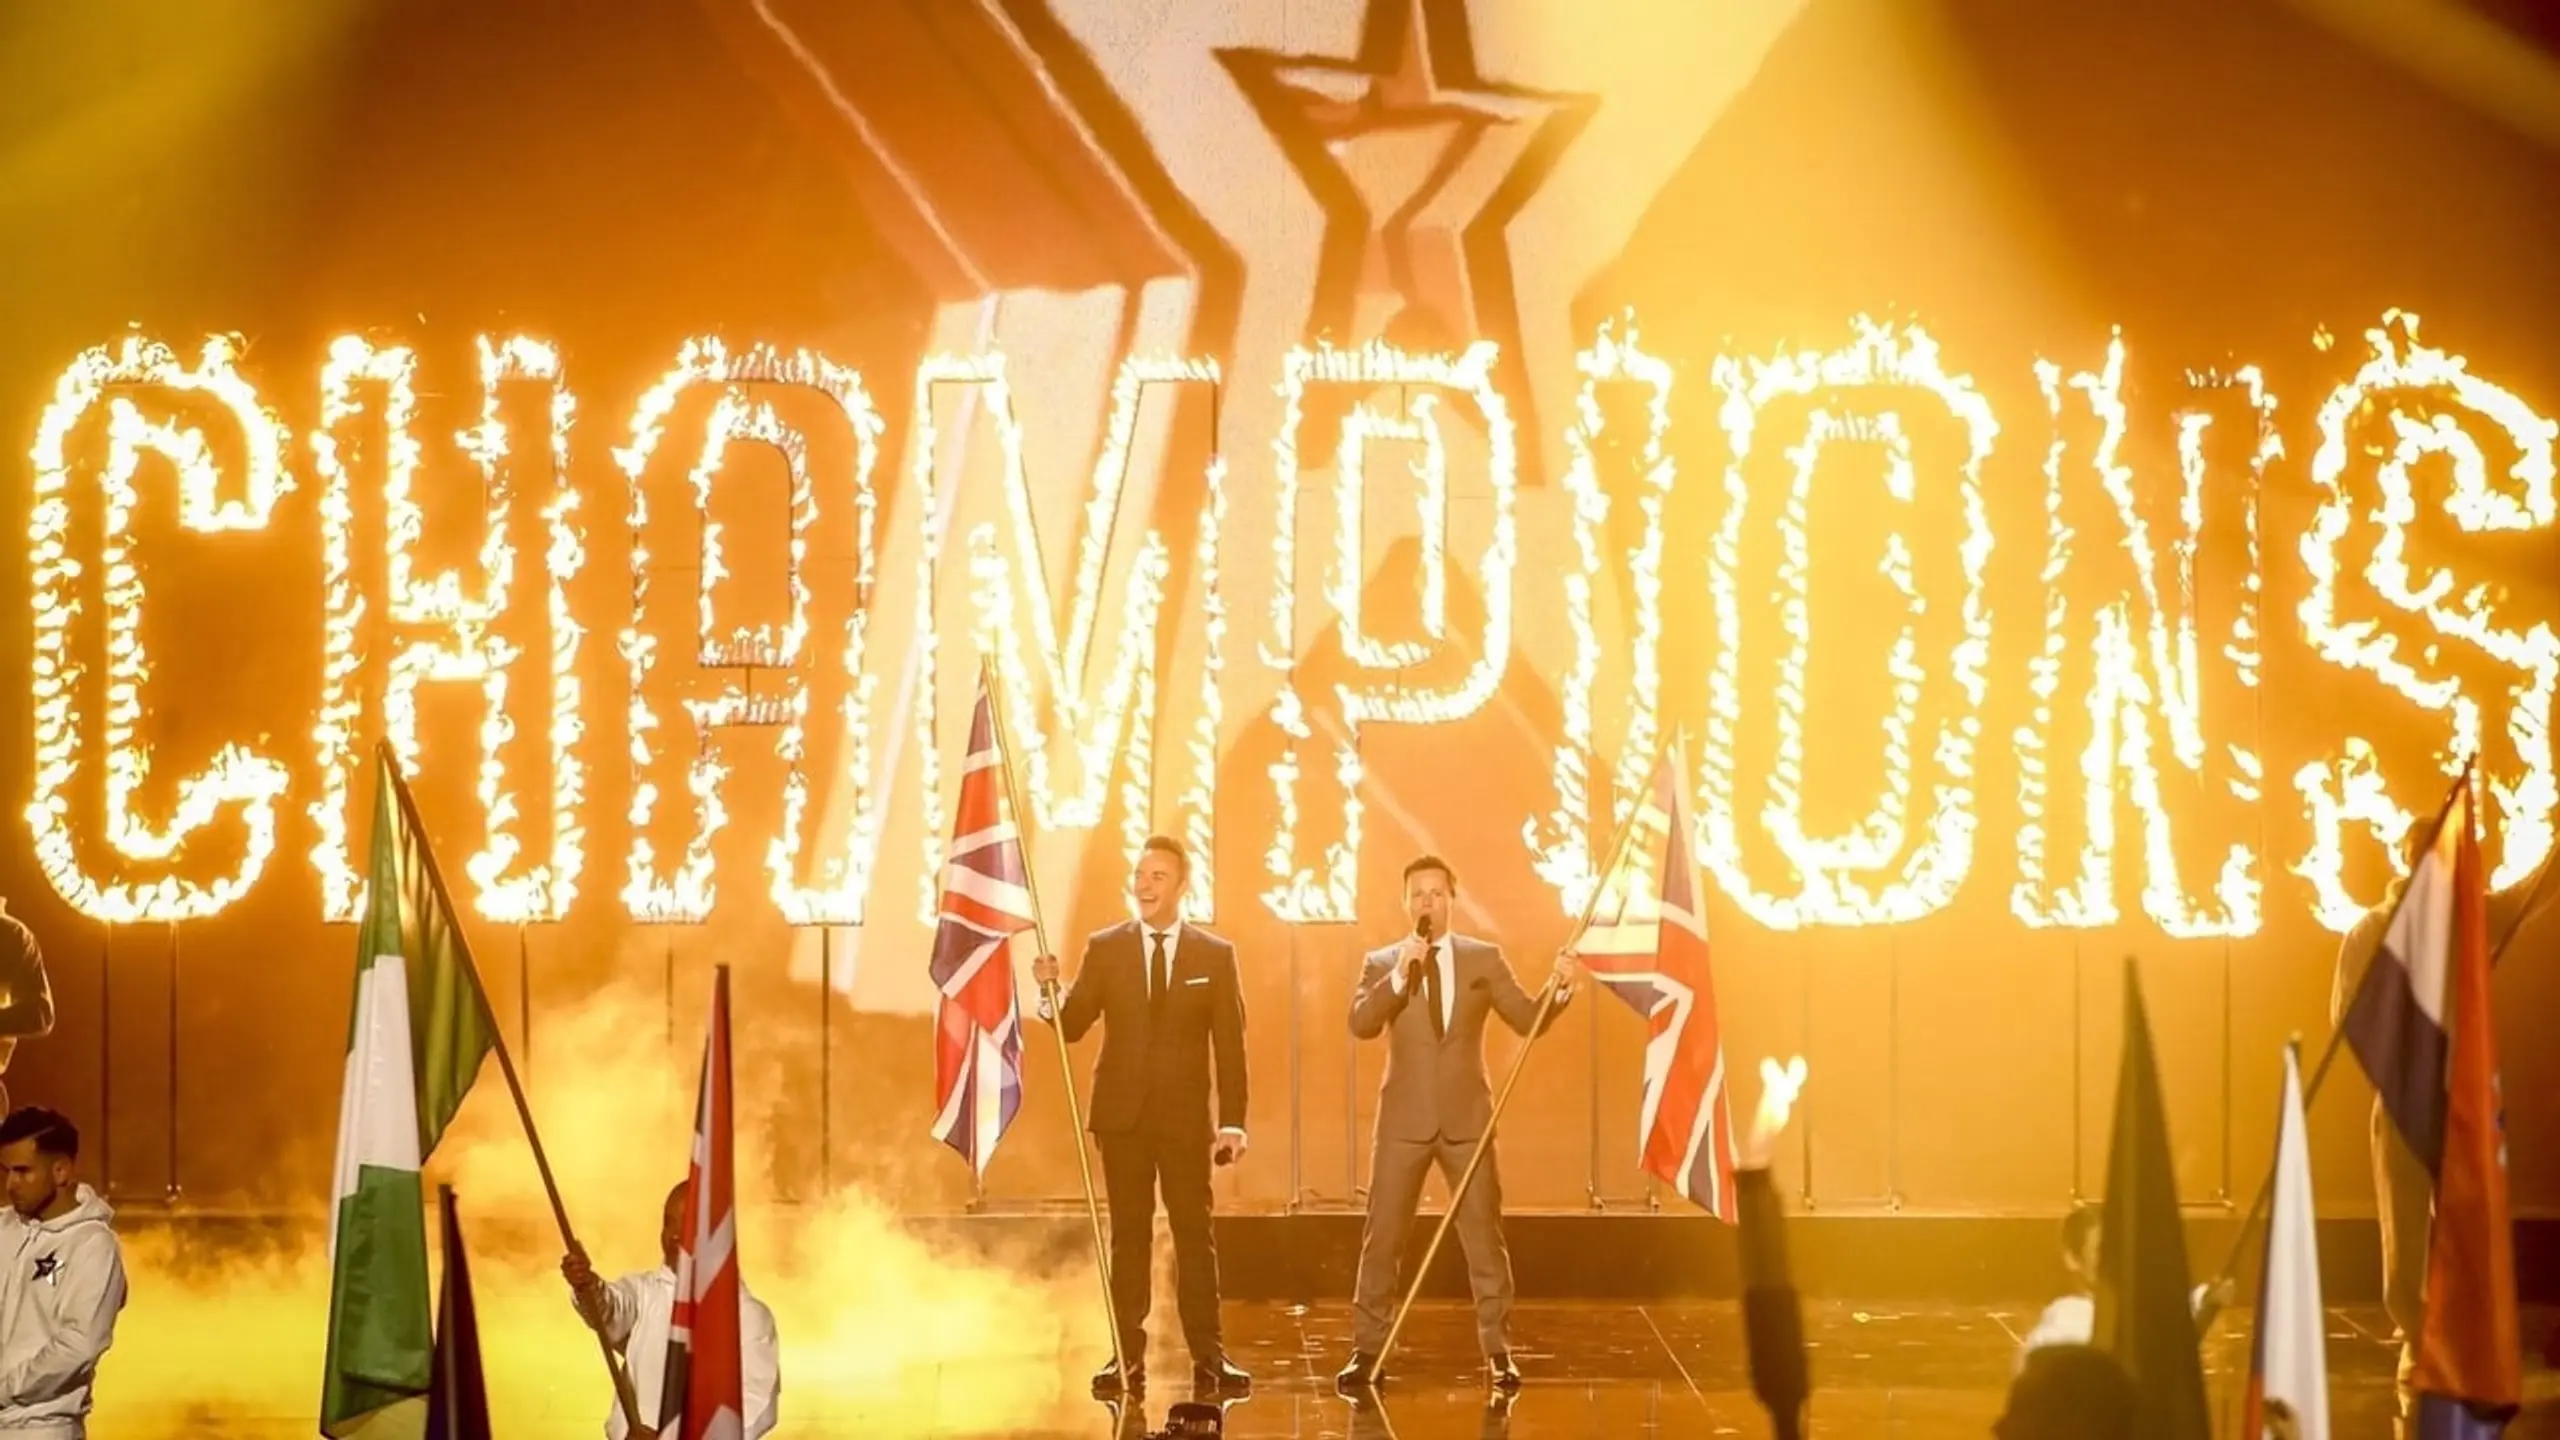 Britain's Got Talent: The Champions